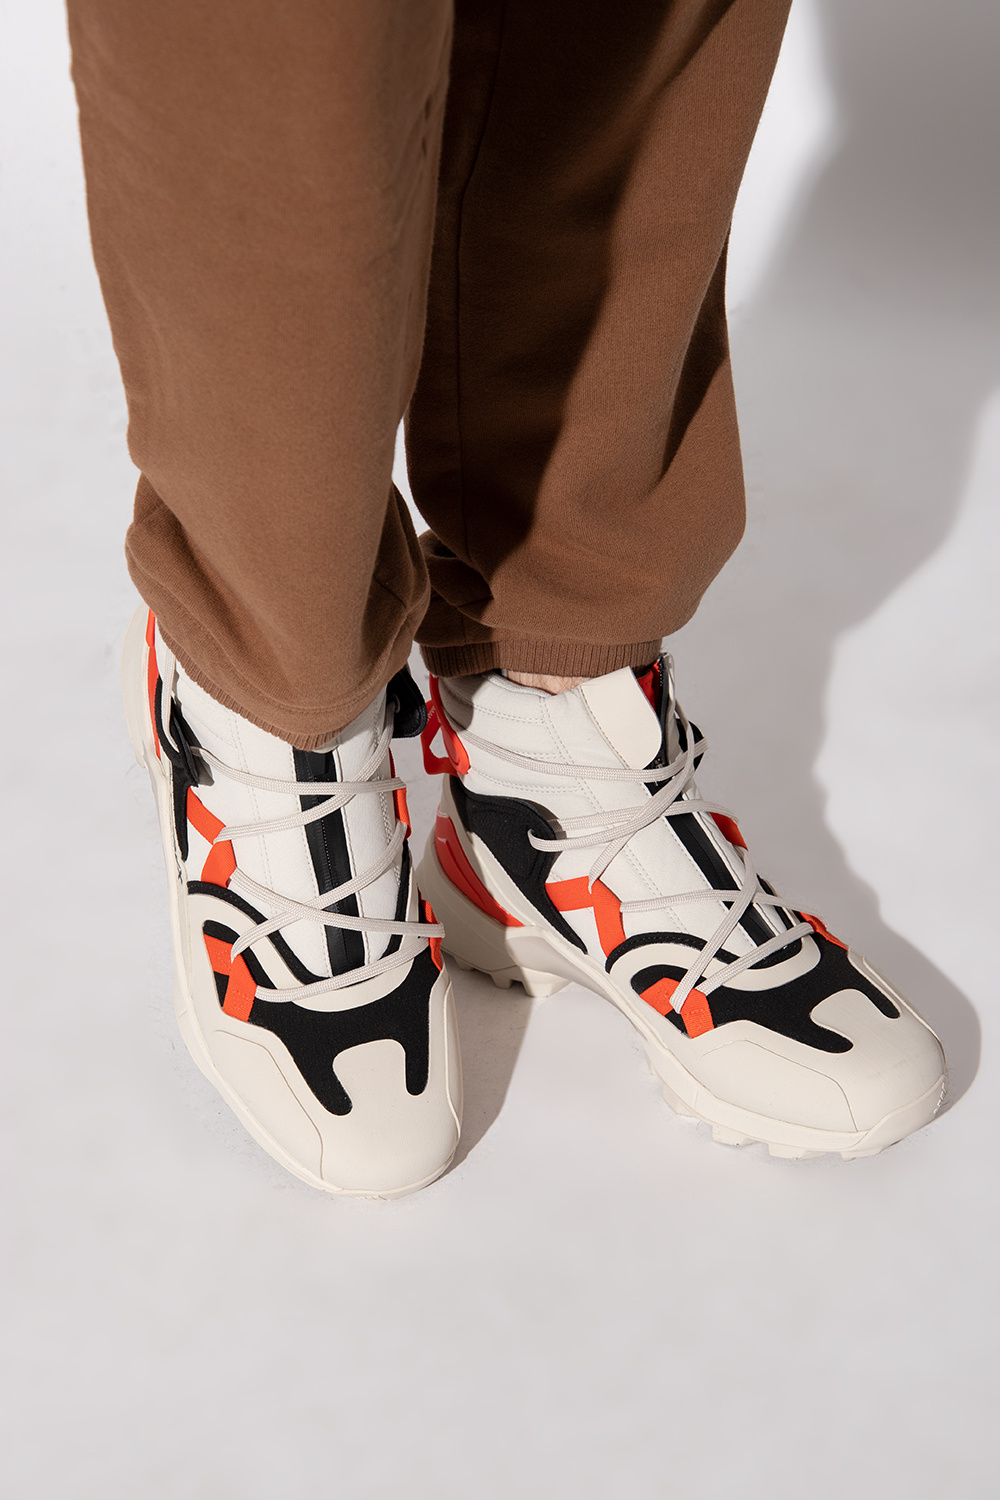 Y-3 Yohji Yamamoto ‘Terrex Swift R3 GTX’ sneakers | Men's Shoes | Vitkac